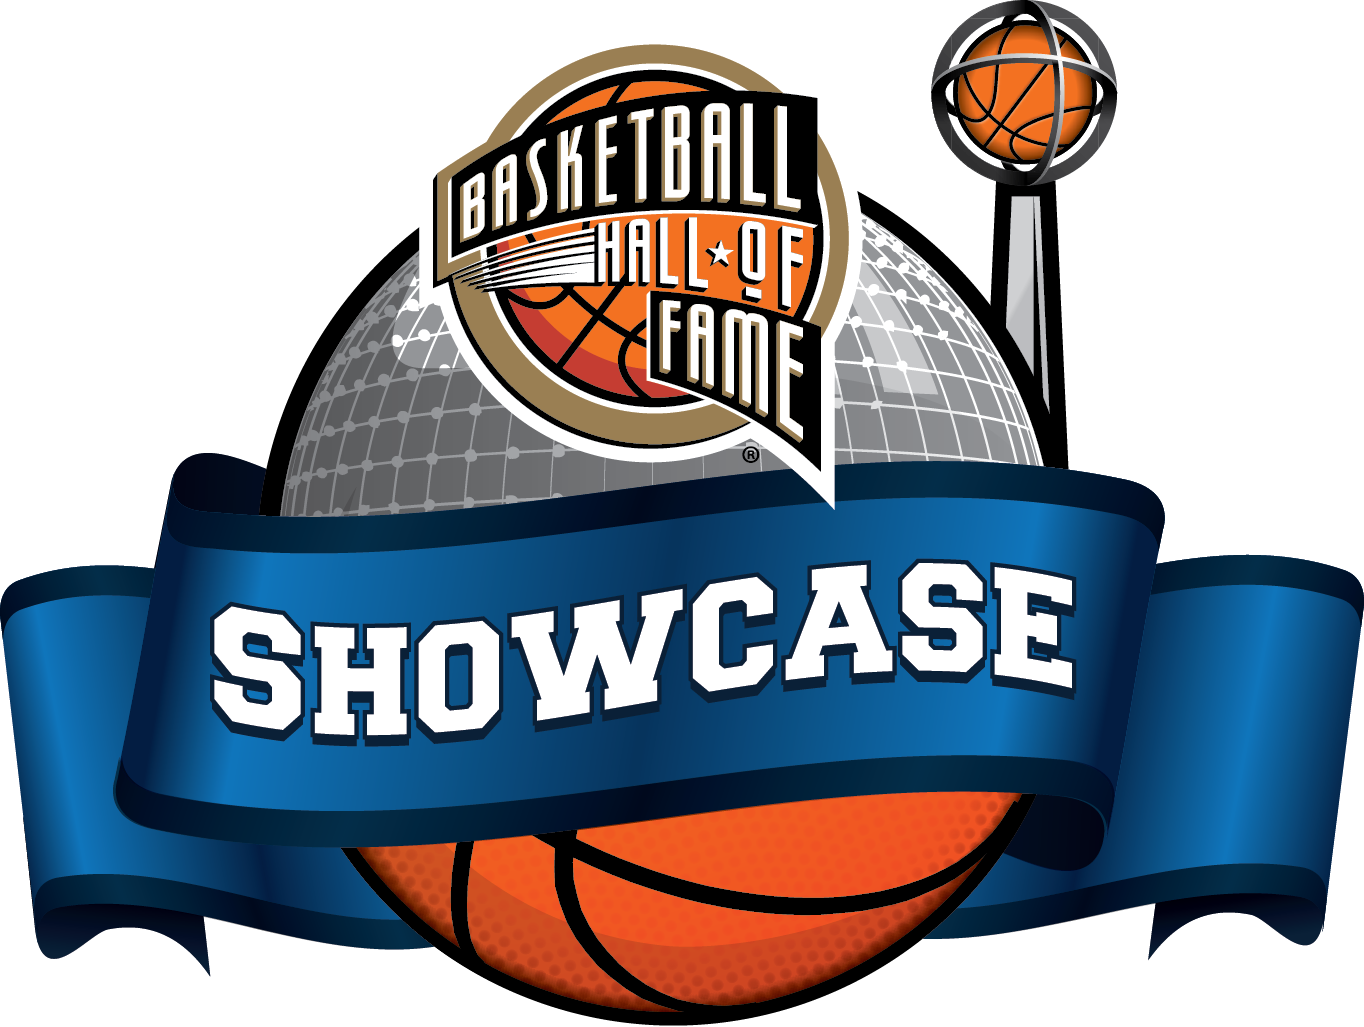 Basketball Hall of Fame Showcase Event Logo